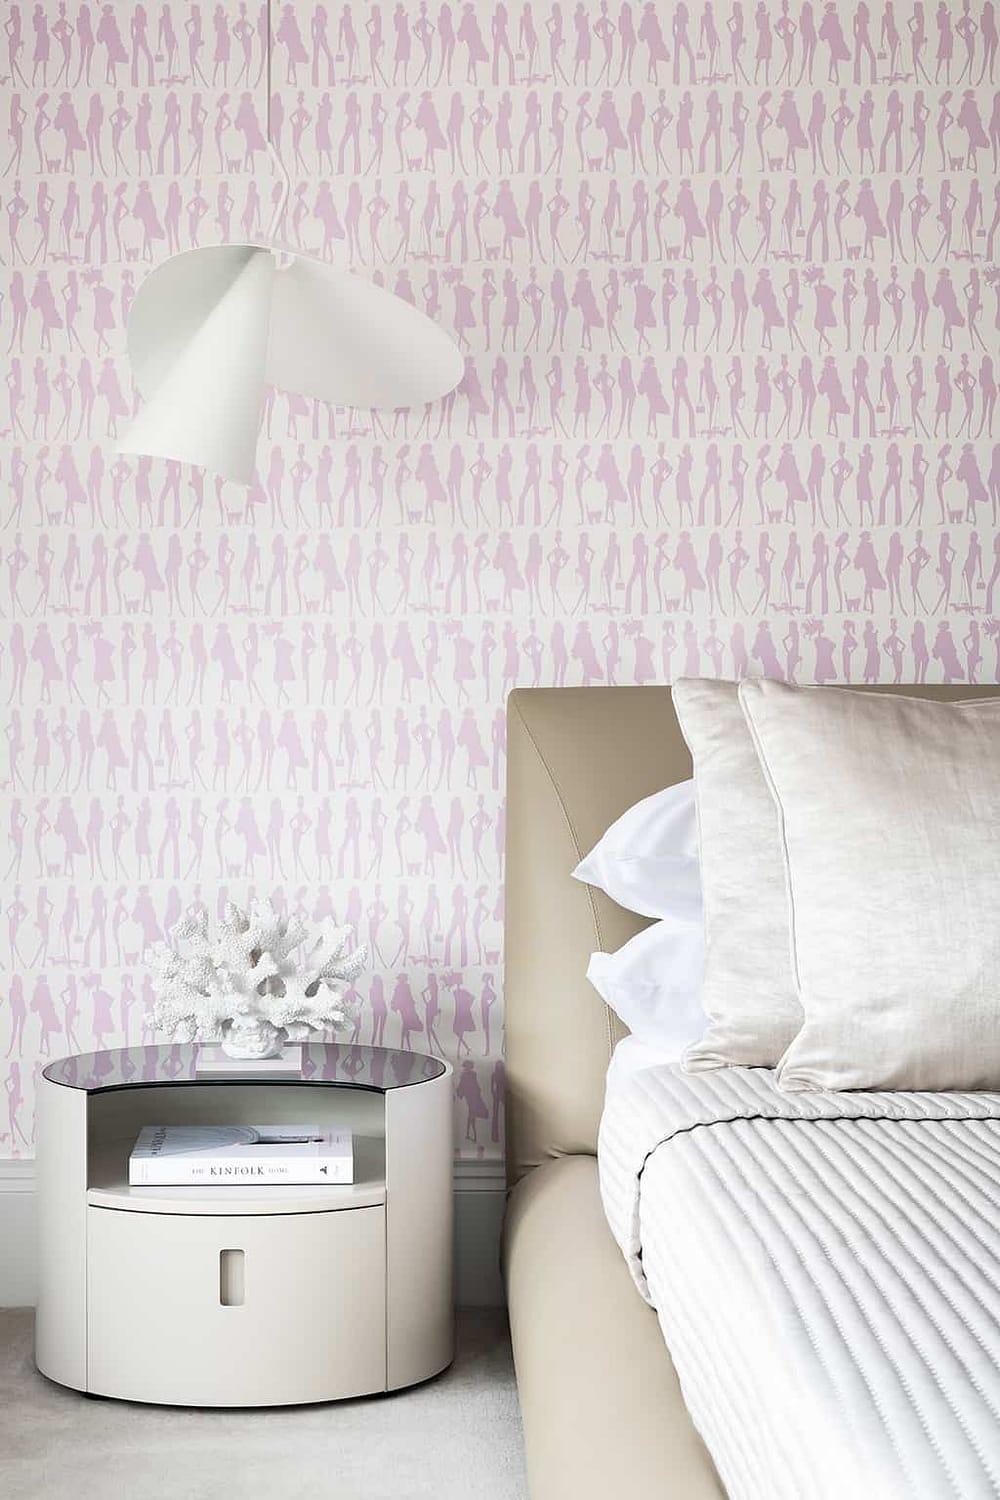 Brentwood Interior Design for a Bedroom Wallpaper